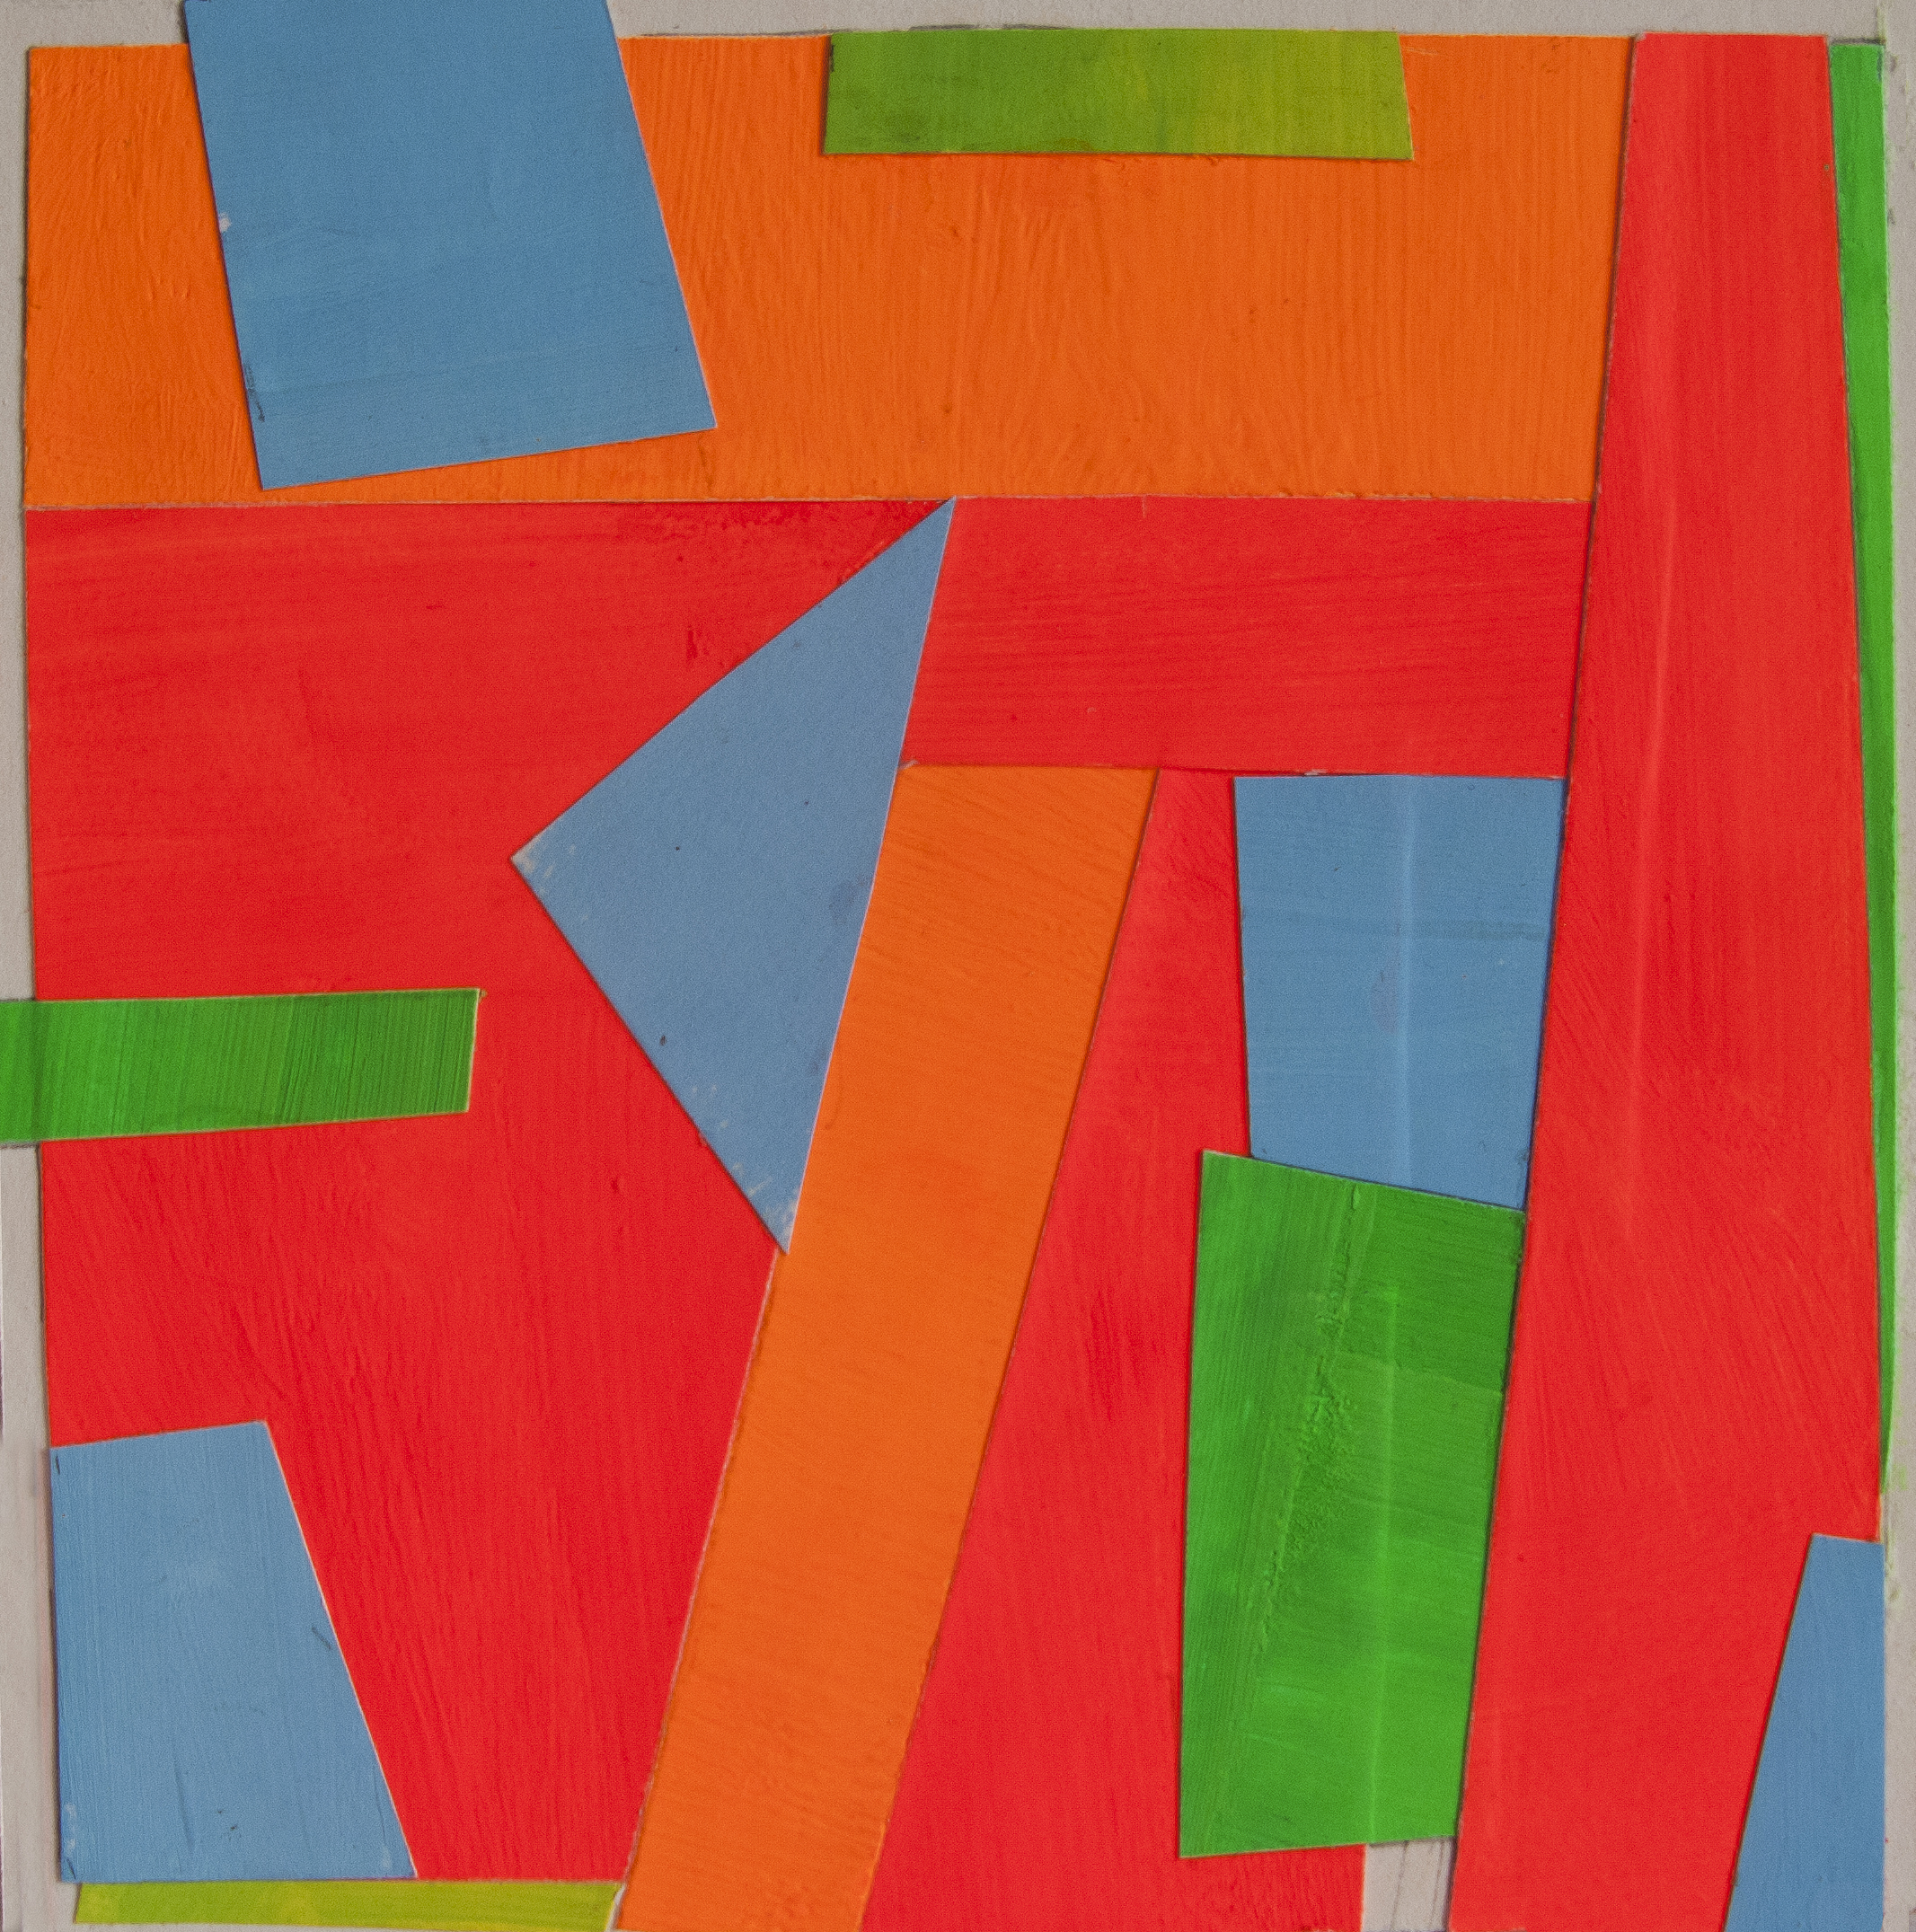    Cutout (red, blue, orange, green),   gouache lumi colors, 6 x 6 in, 2016 